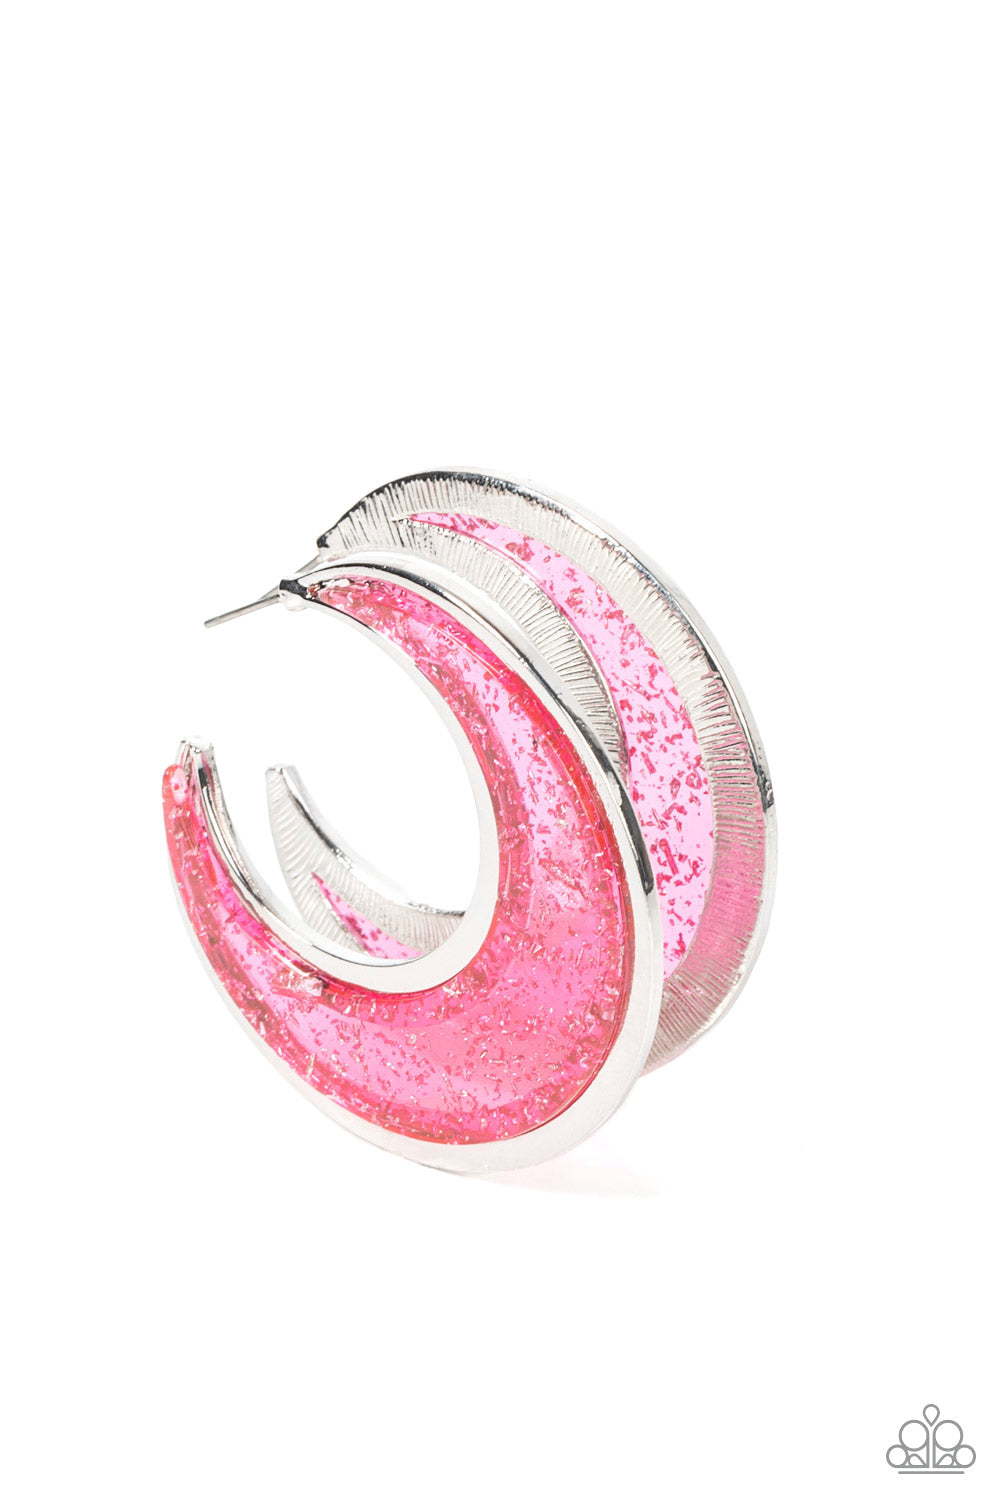 Charismatically Curvy - Pink Hoop Earrings - Princess Glam Shop